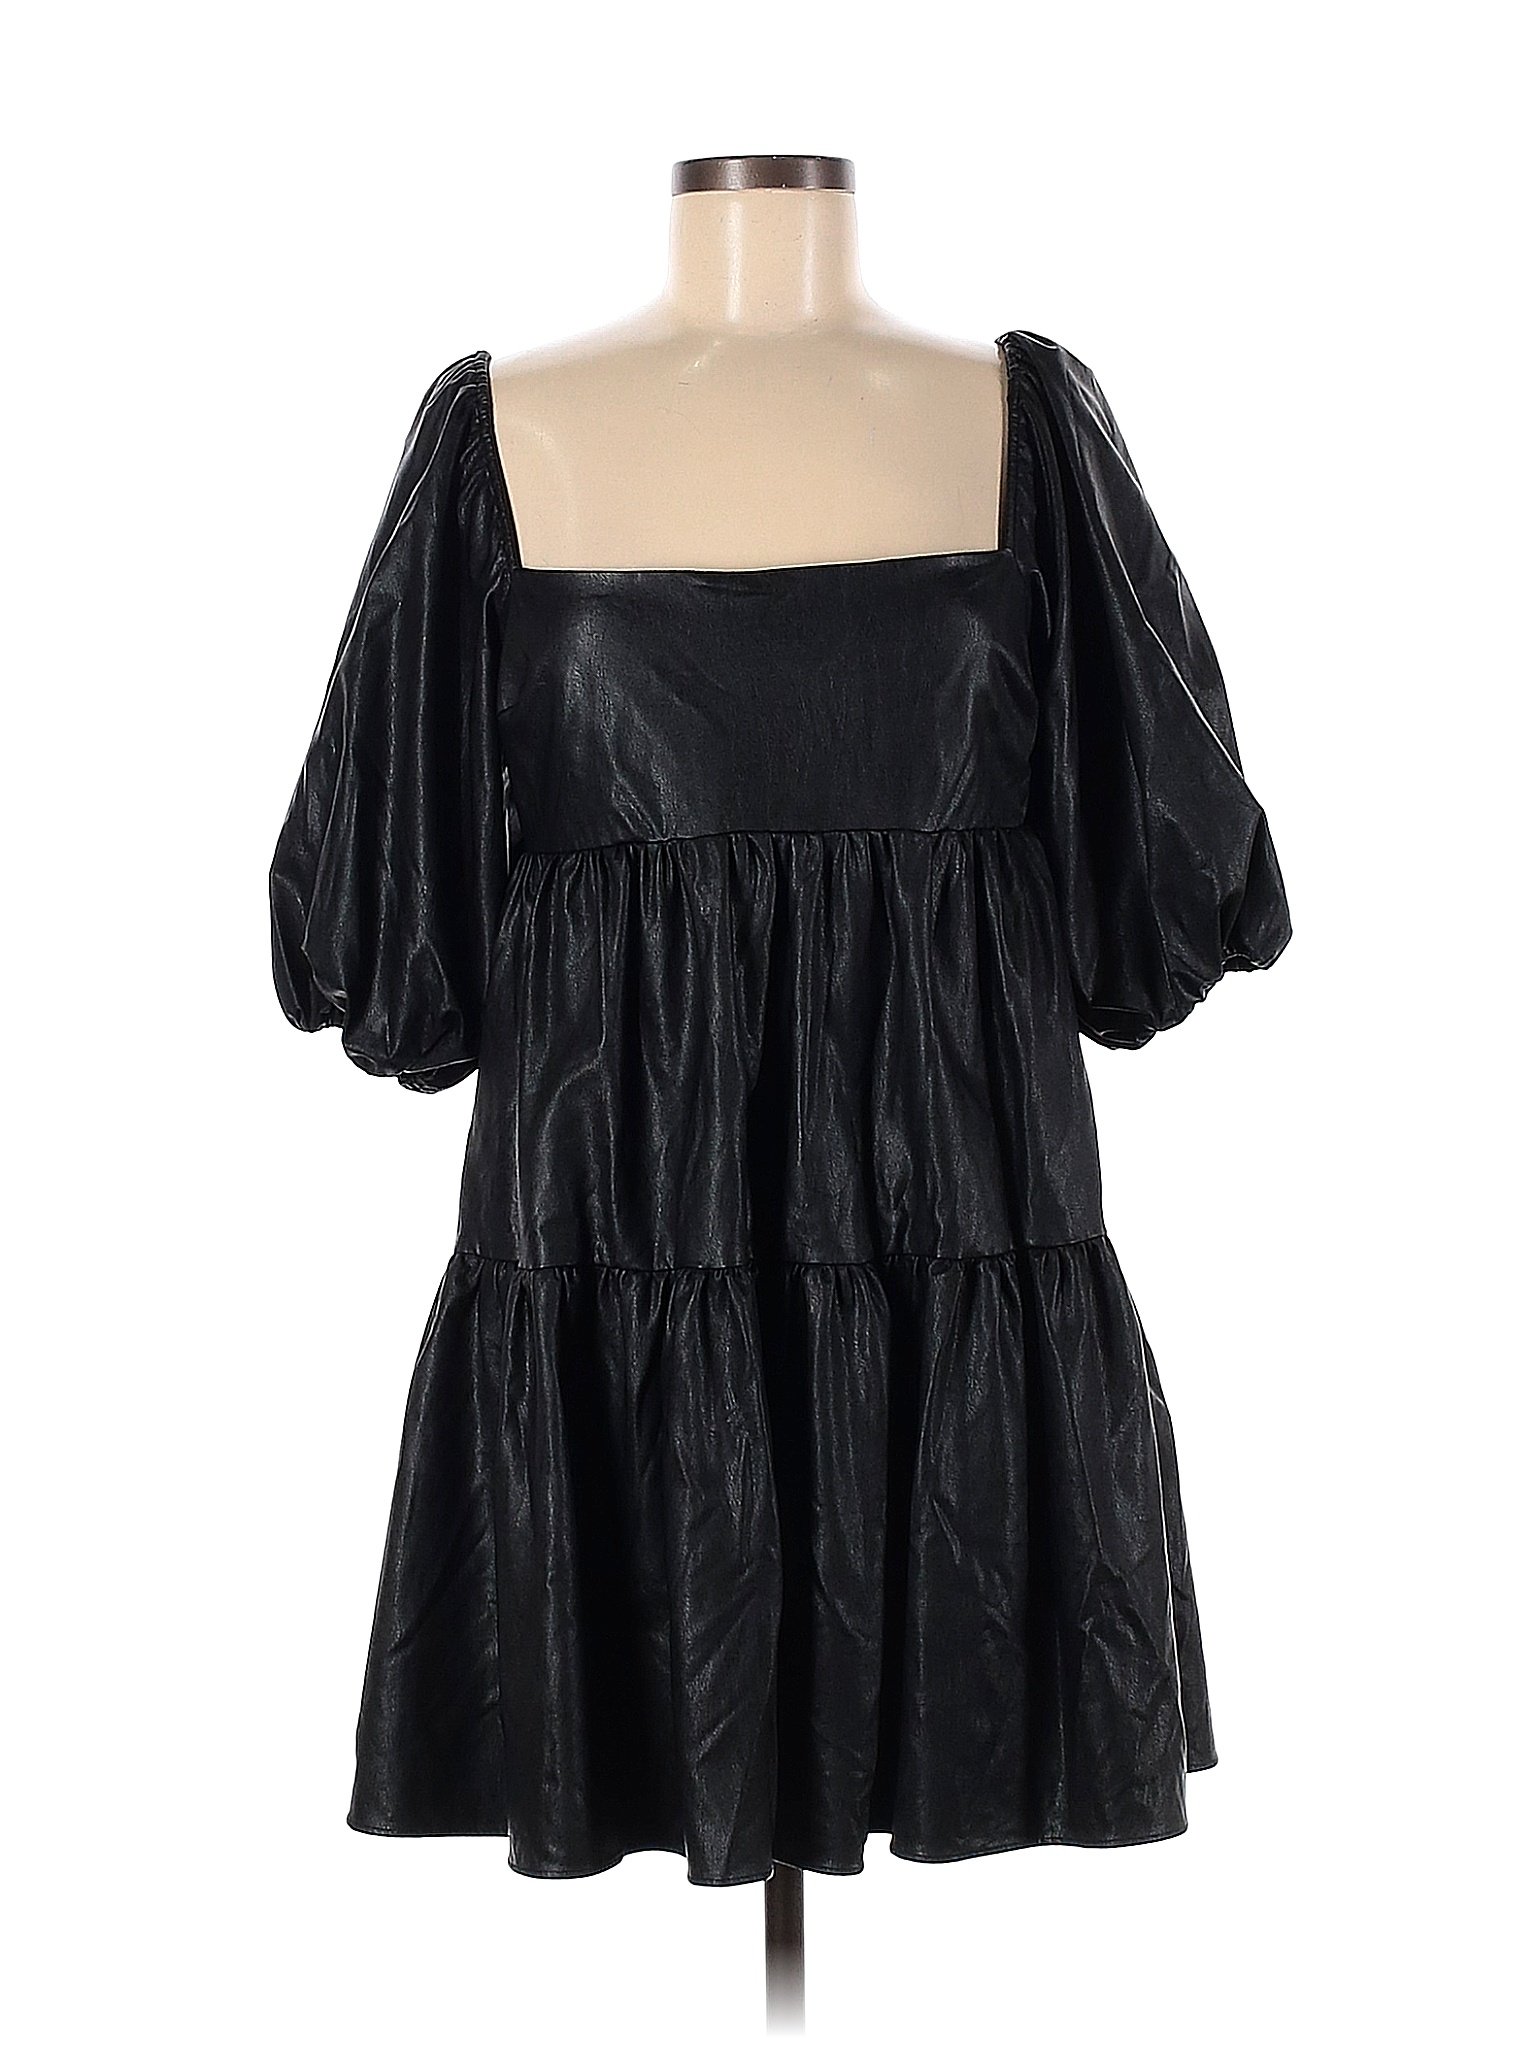 Amanda Uprichard Solid Black Faux Leather Maisie Dress Size M - 79% off ...